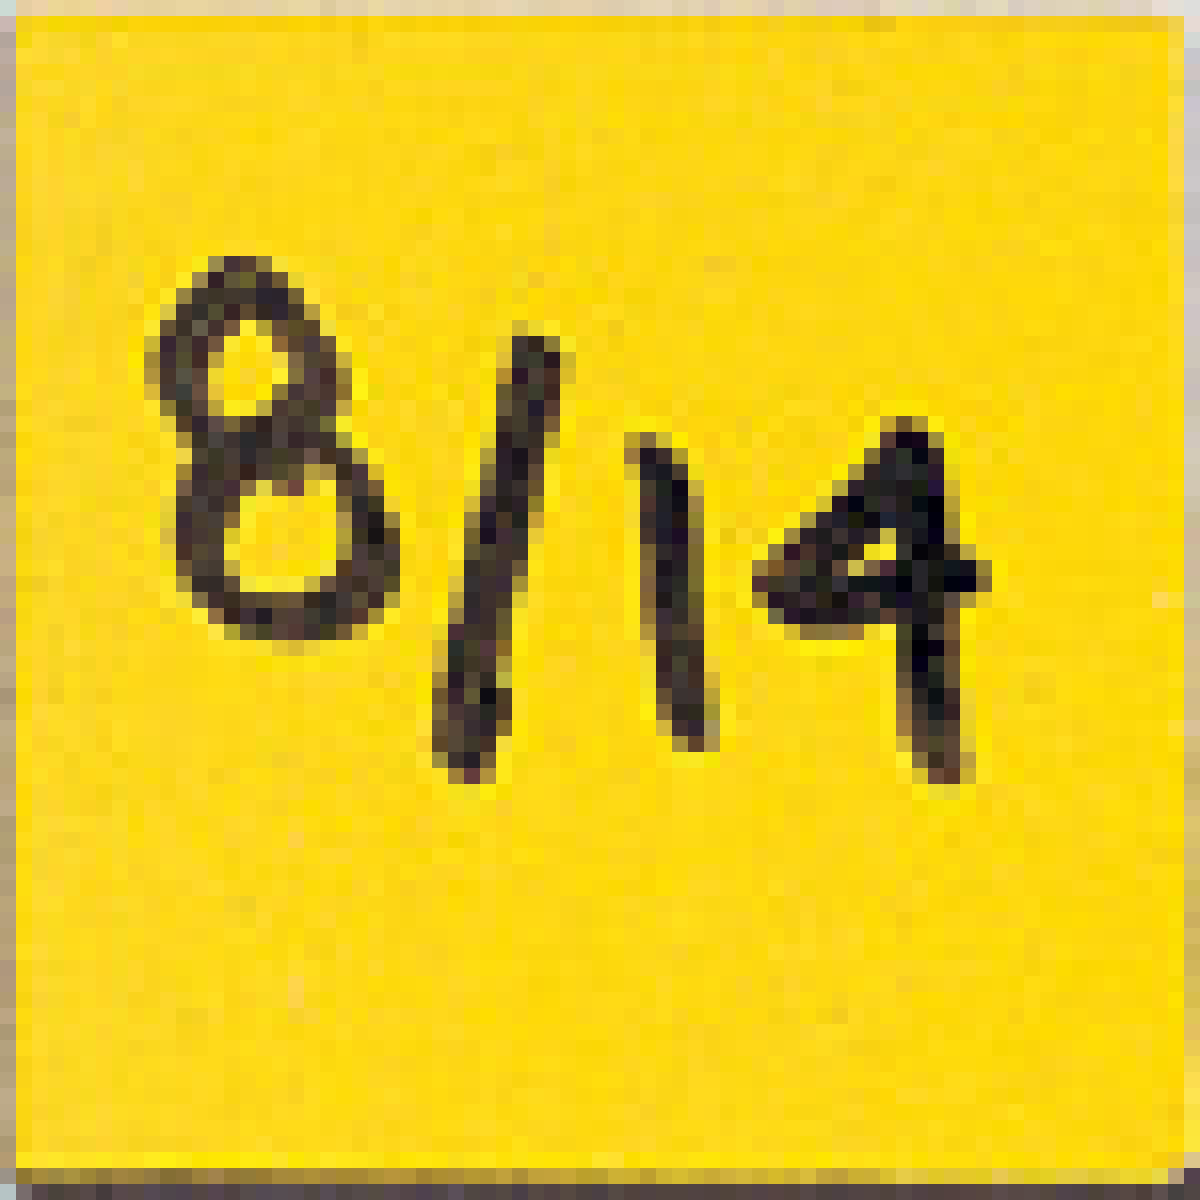 sample 1x1 inch square symbol with job data